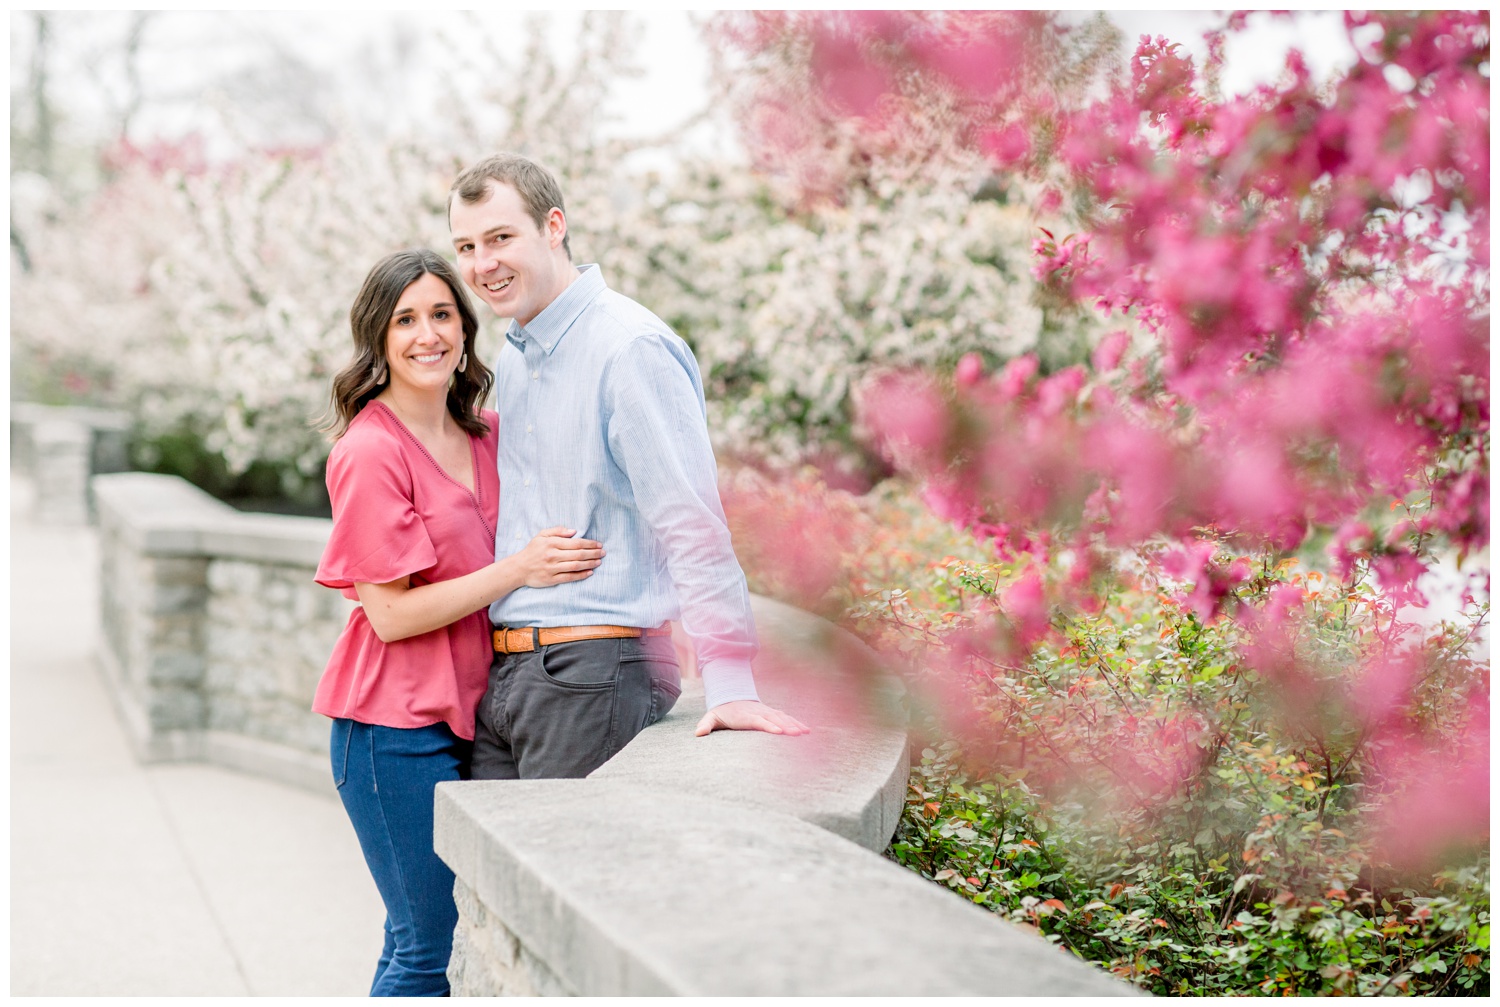 Engaged Couple at Ault Park in Spring - Cincinnati Flowering Trees